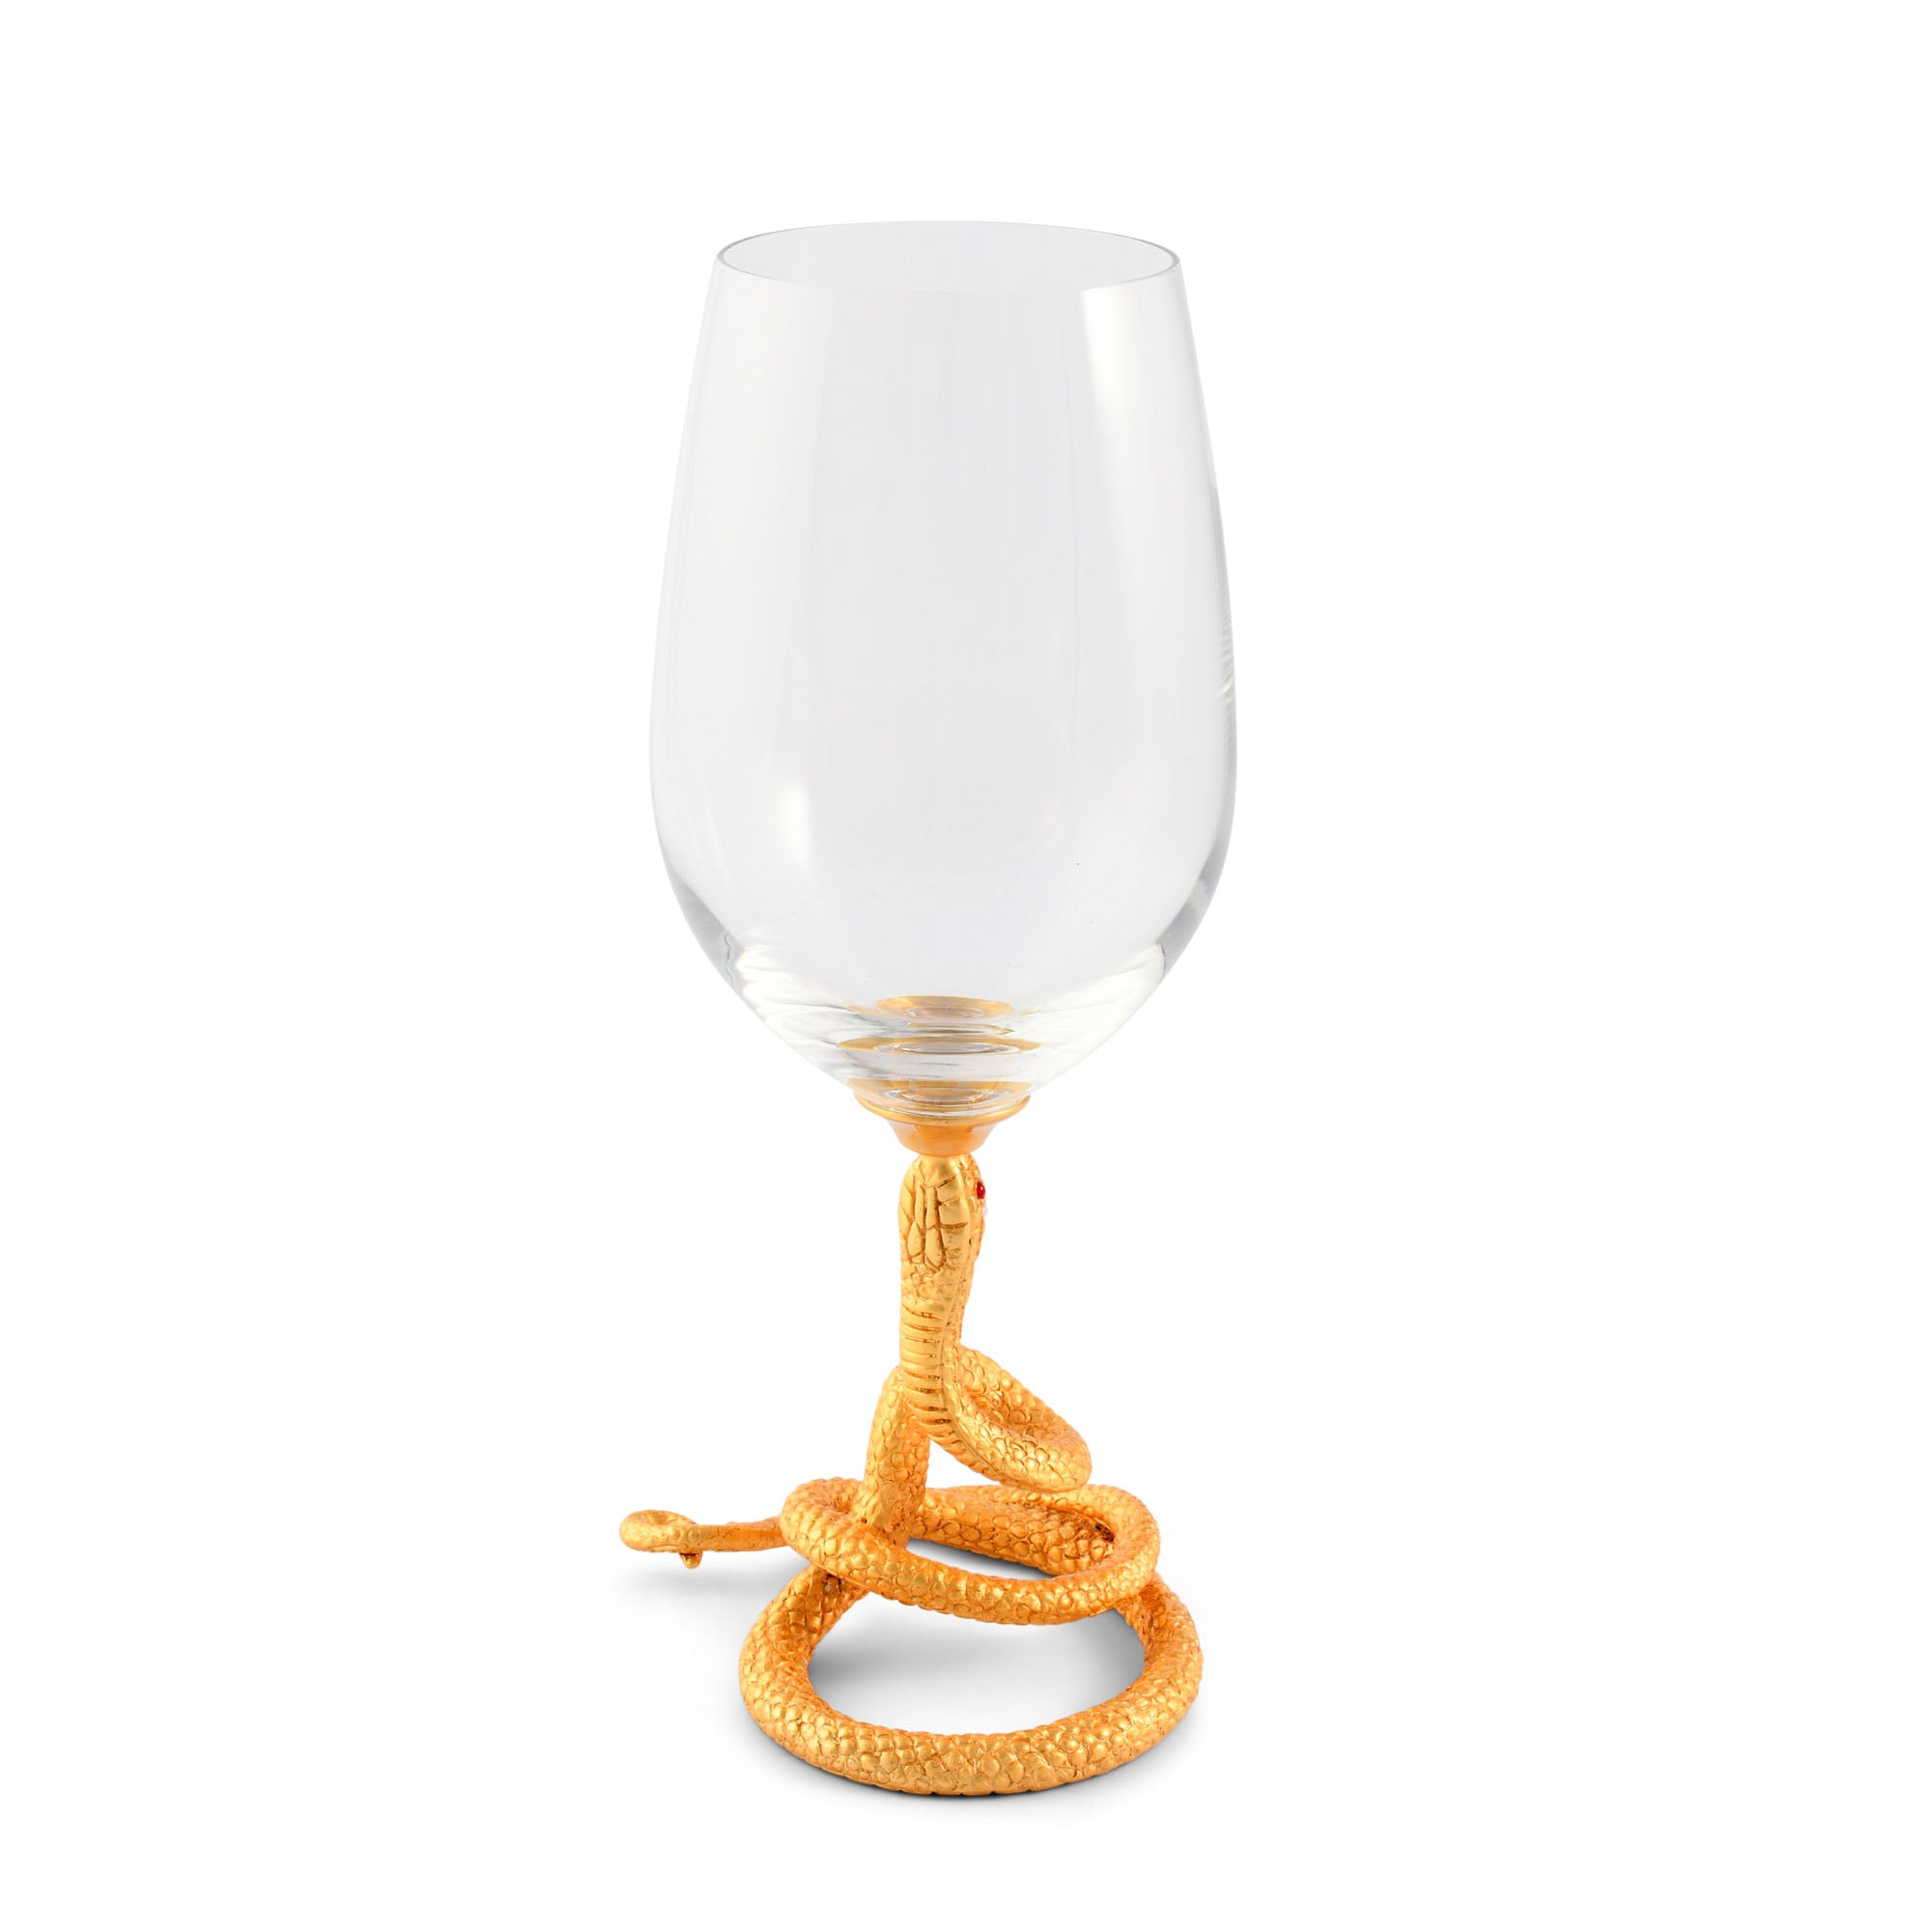 Vagabond House Snake Wine Glass Product Image